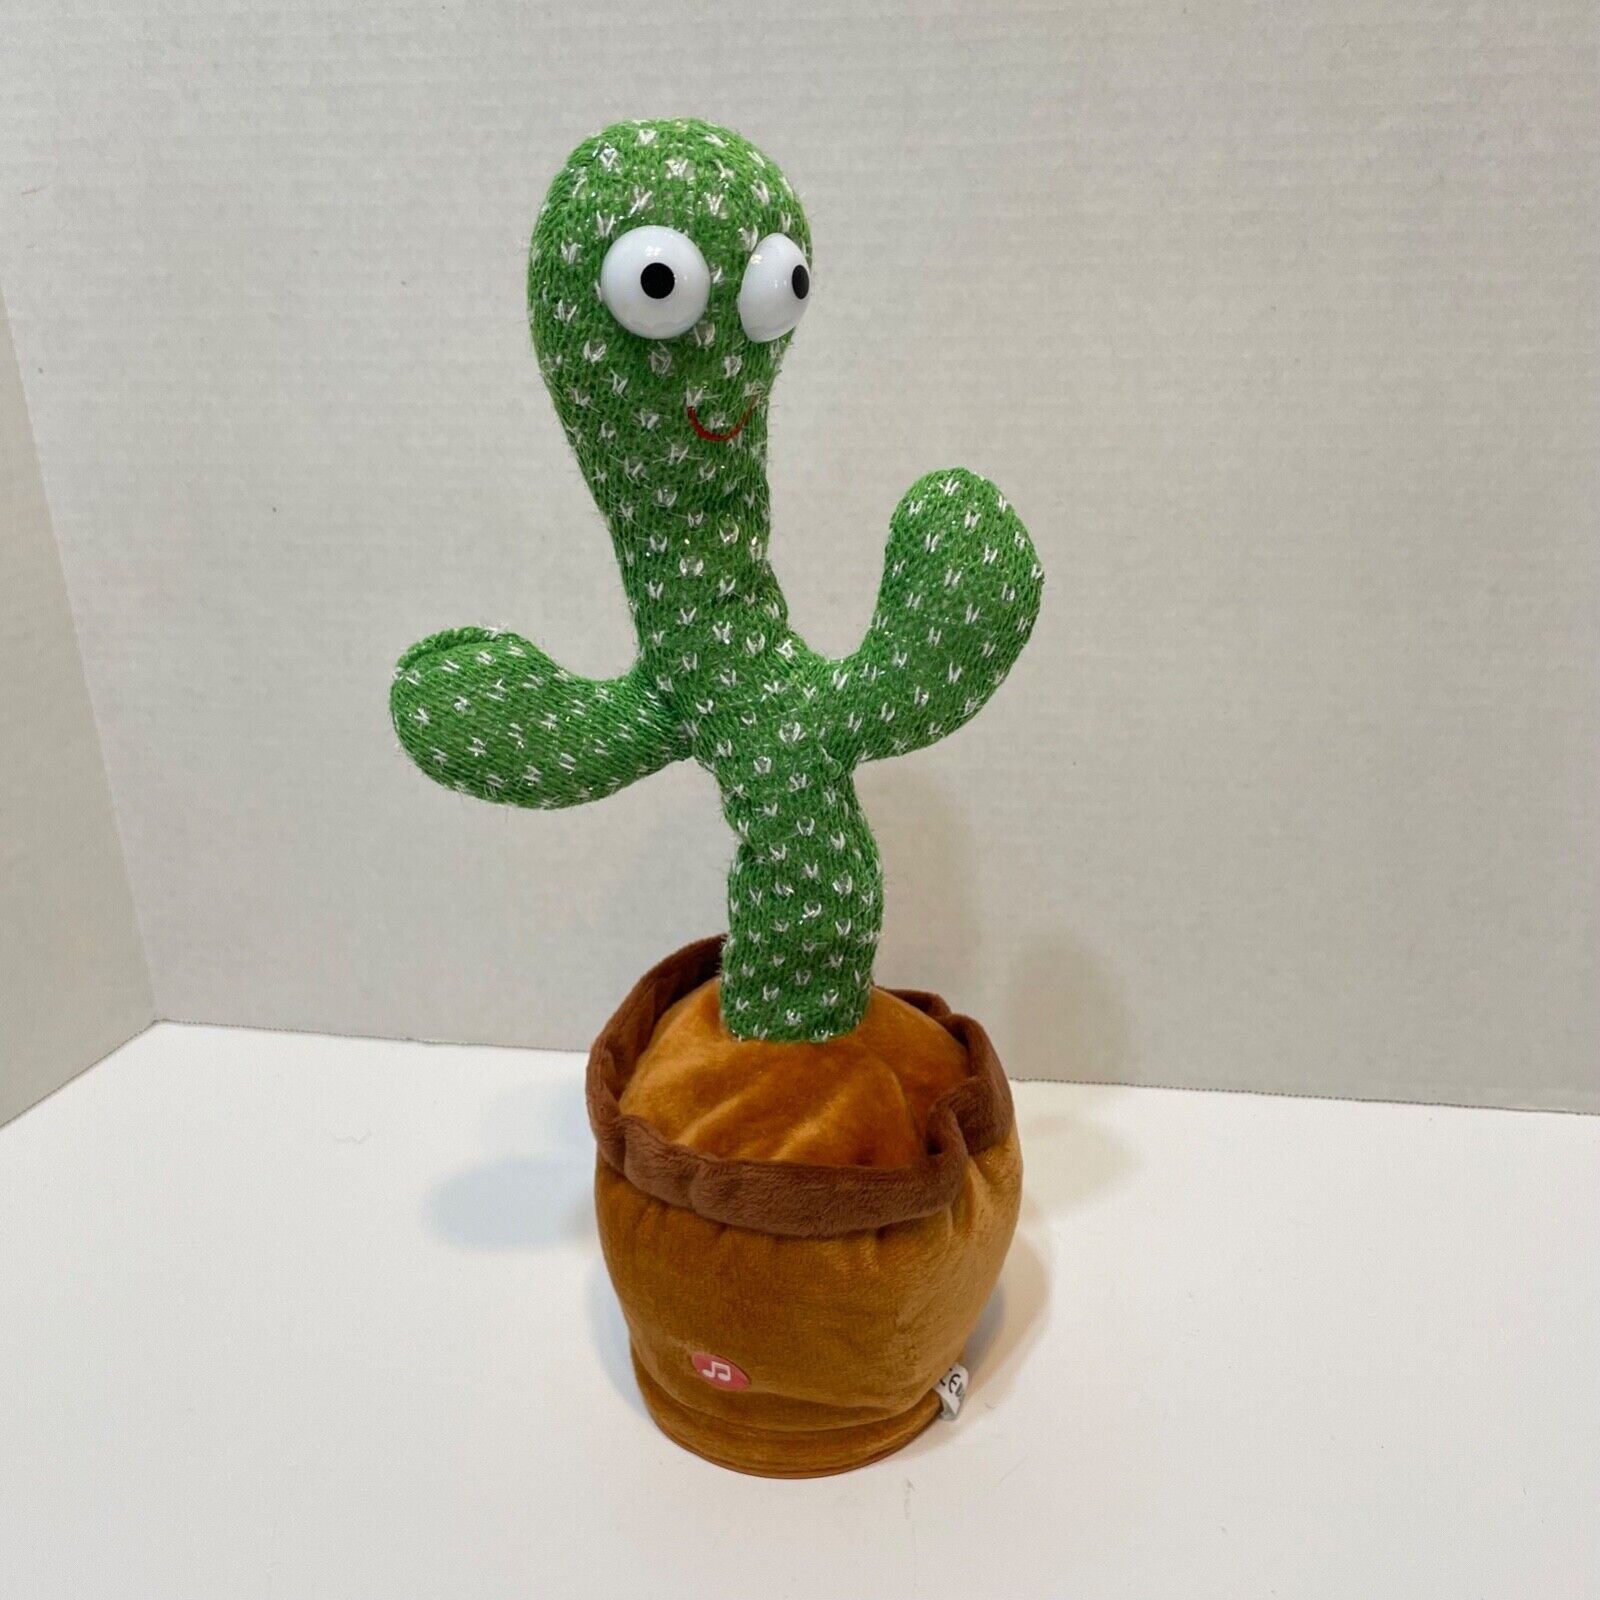 Rare Animated Plush Cactus Sings Happy Birthday Dances Lights Repeats Phrases